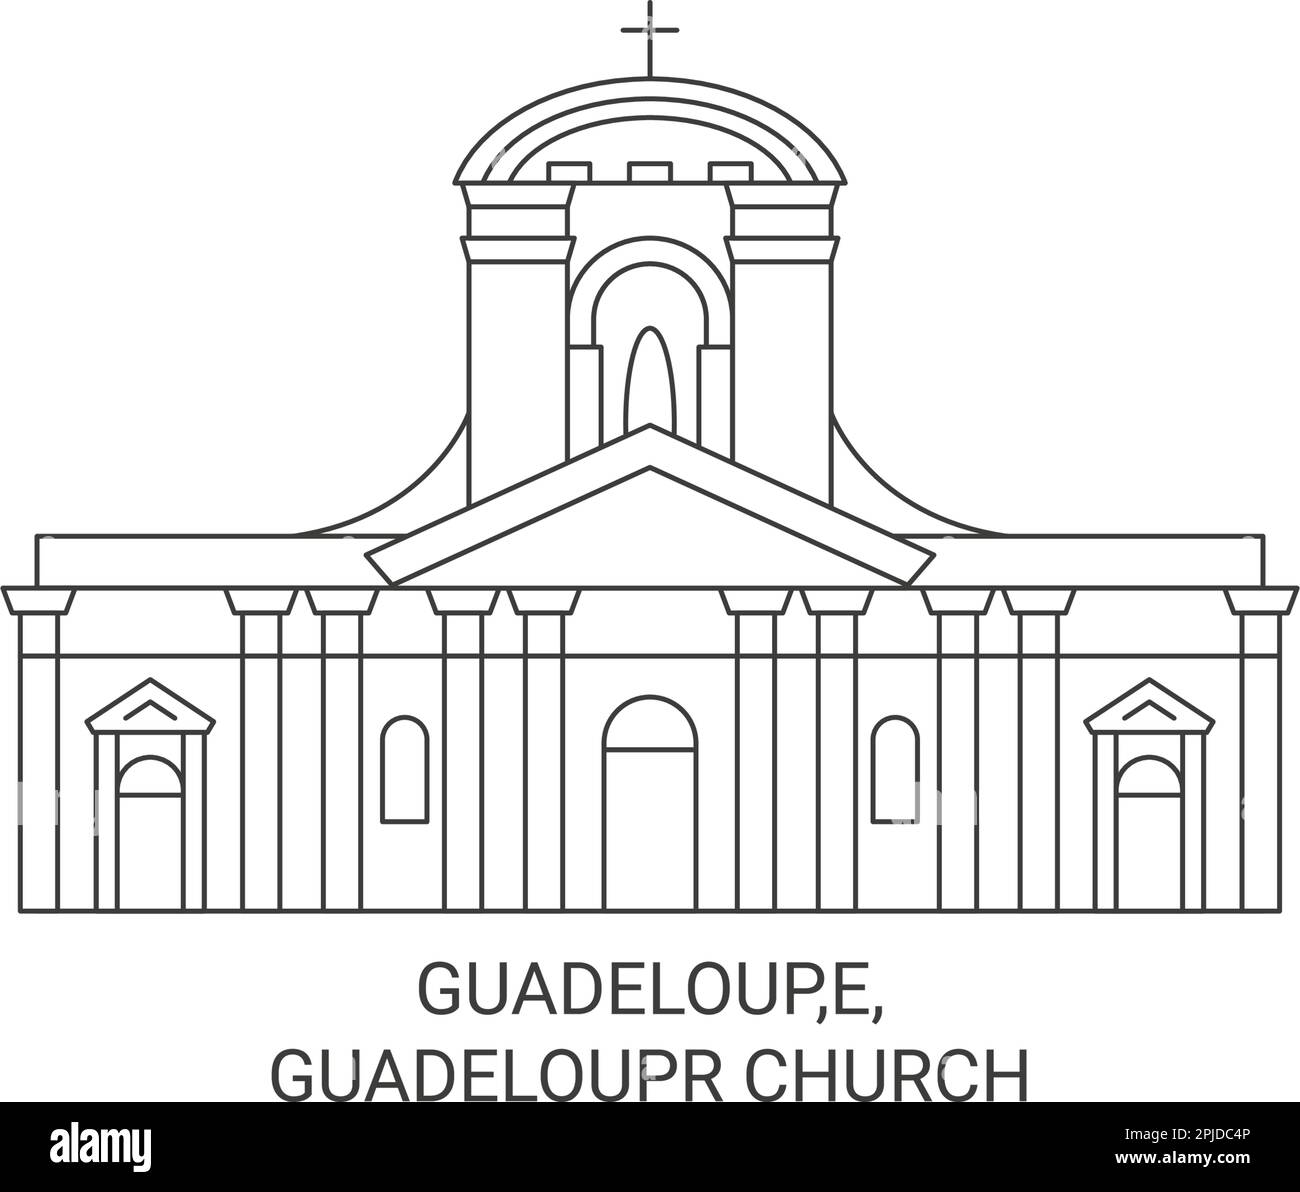 Guadeloup,E, Guadeloupr Church travel landmark vector illustration Stock Vector